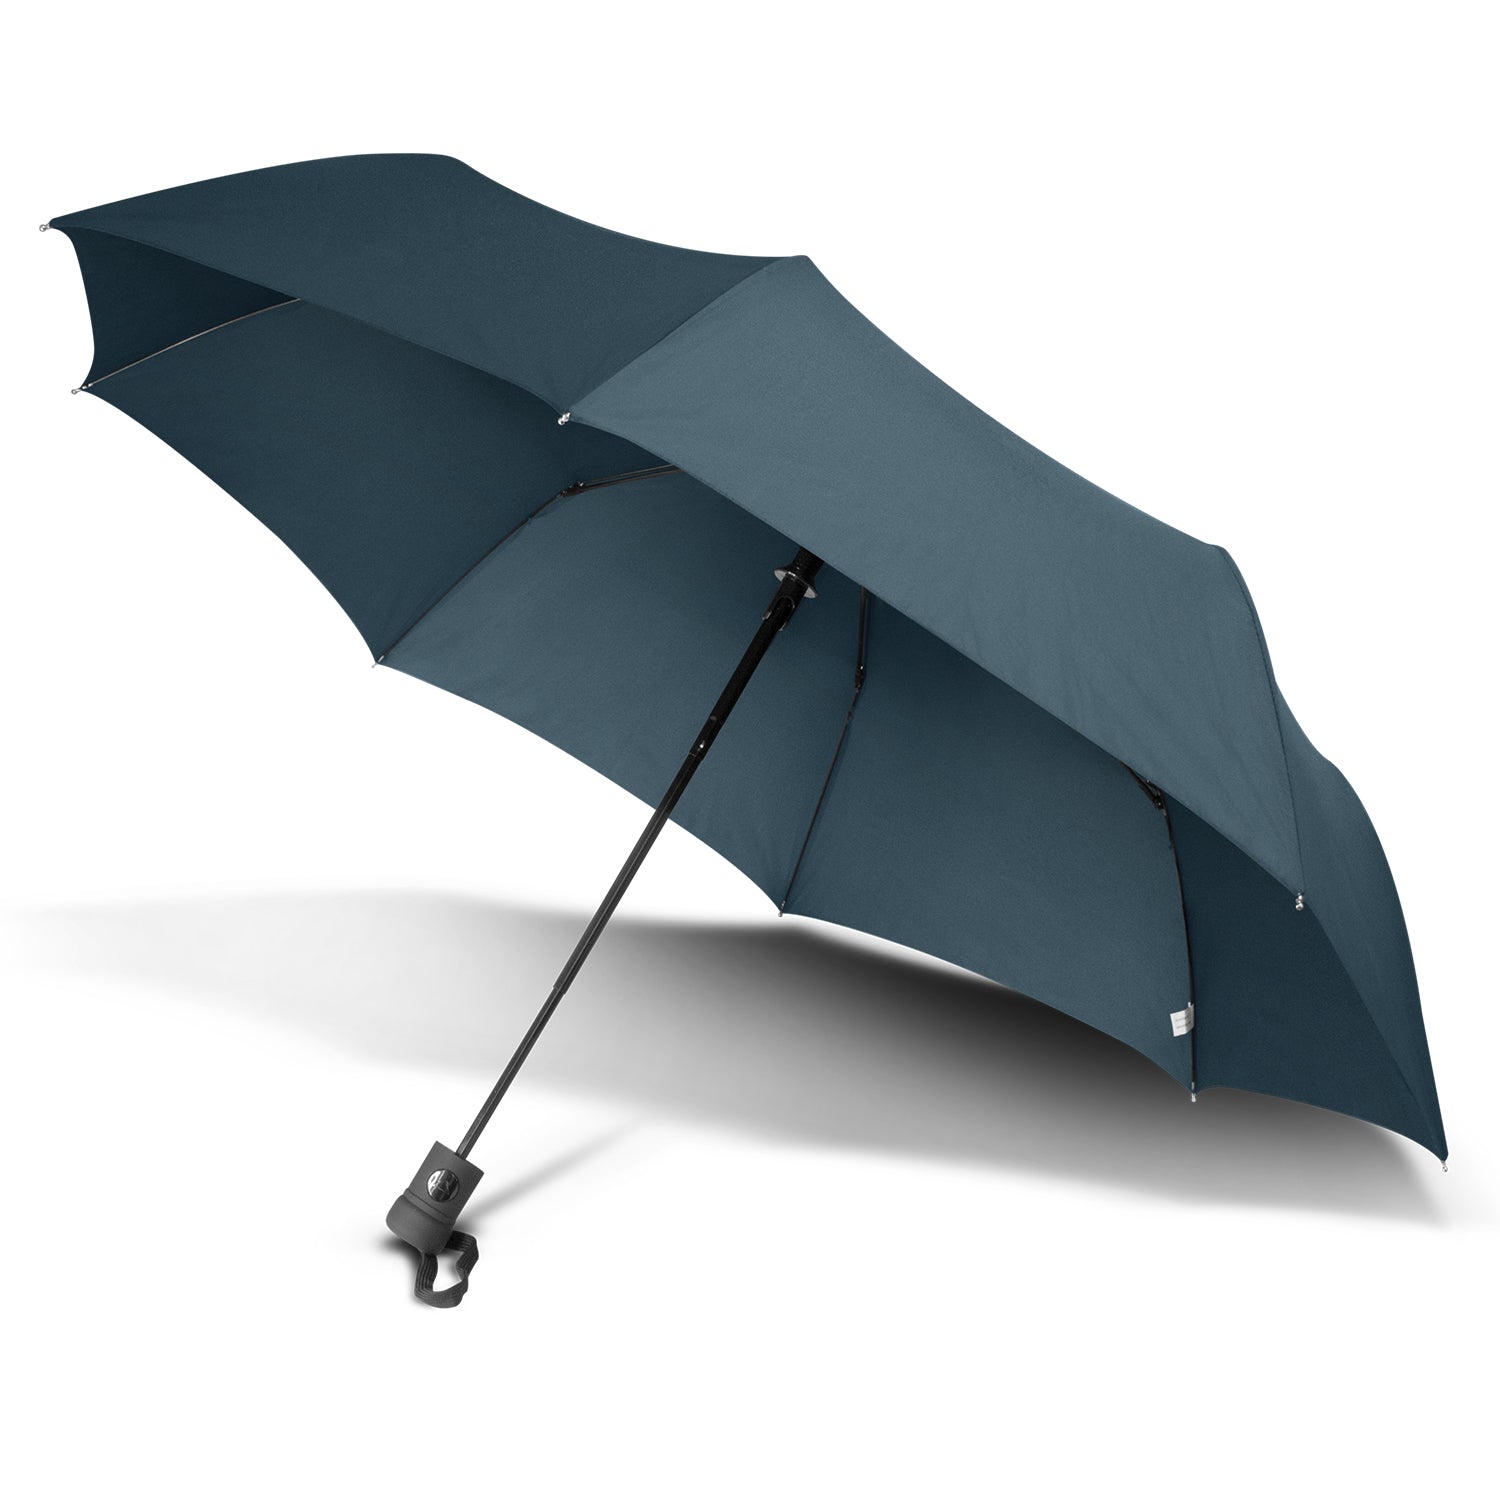 PEROS-TRI-FOLD-COMPACT-Umbrella-Compact-Travel-Umbrella-collapsible-steel-shaft-navy-blue